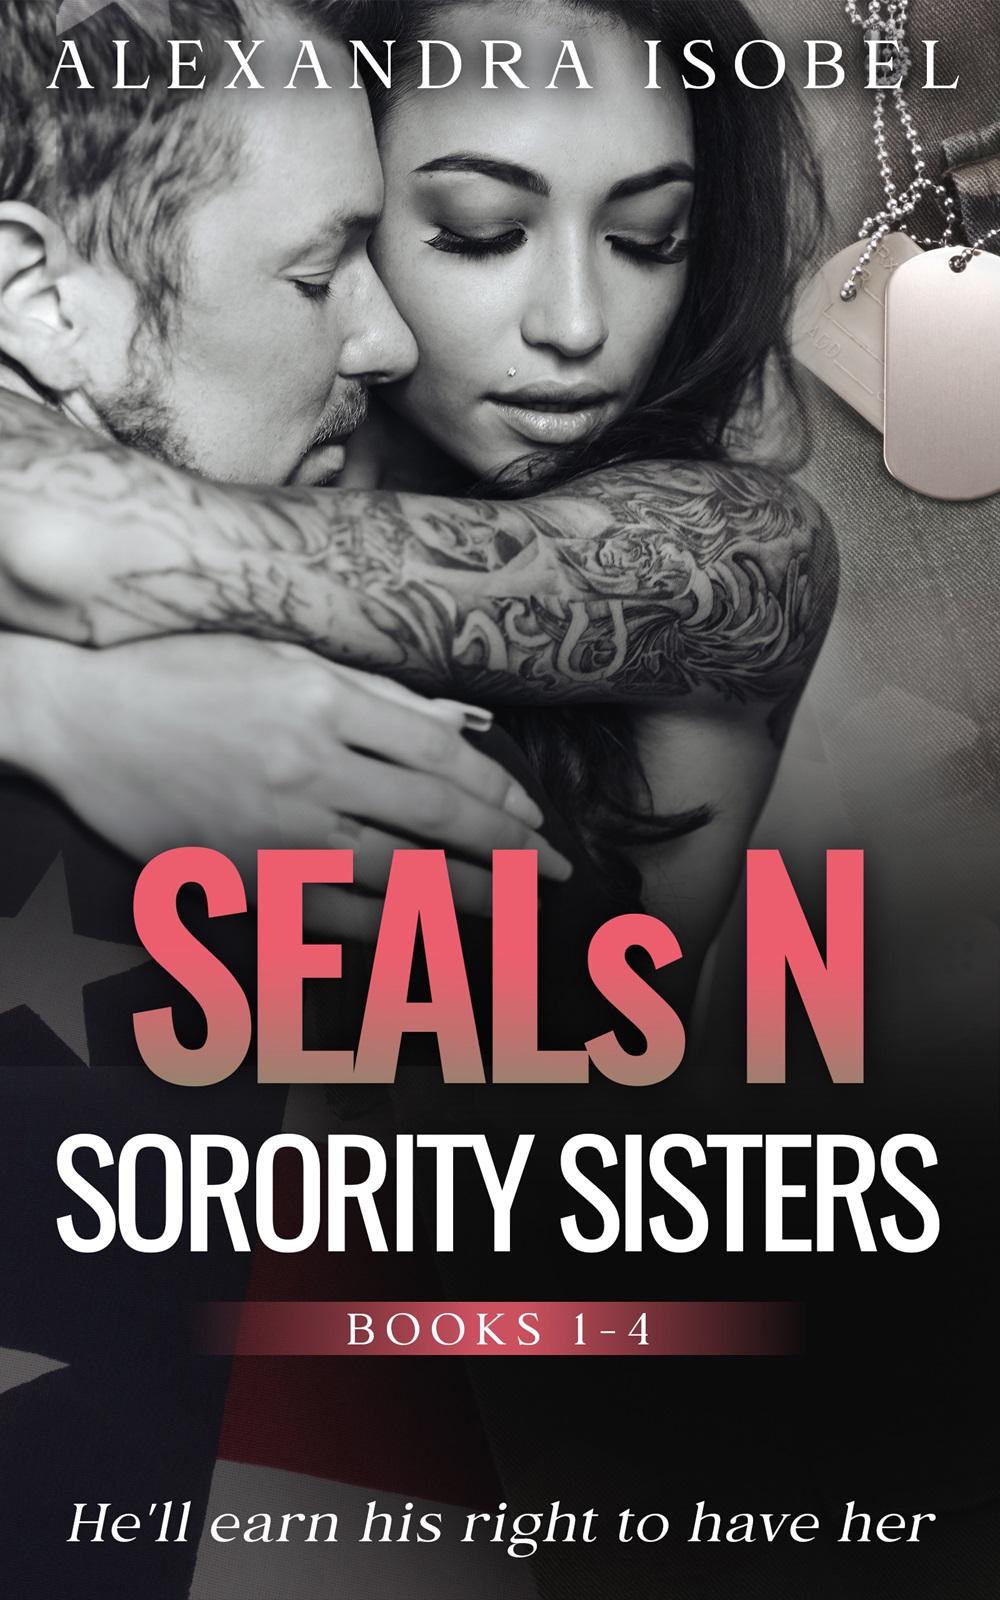 SEALs N Sorority Sisters cover by Alexandra Isobel, 1-June-2022